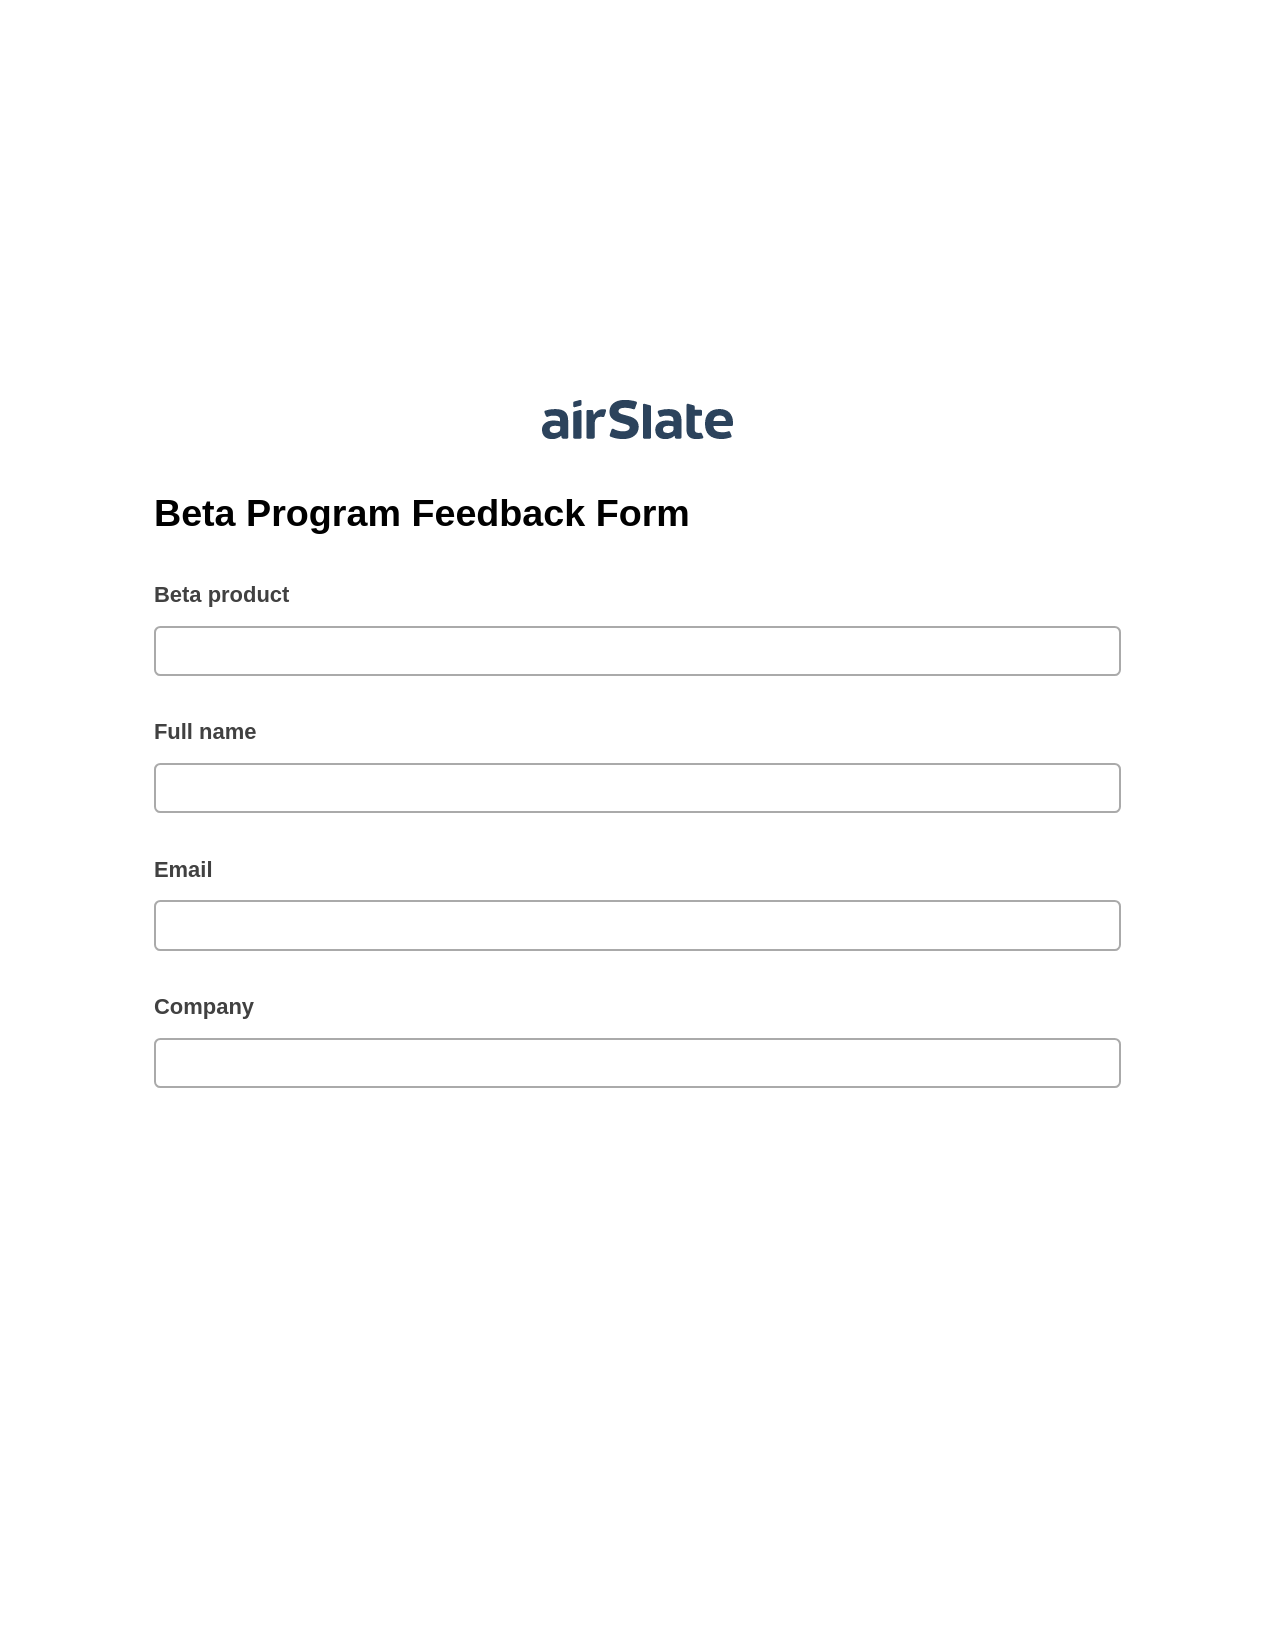 Multirole Beta Program Feedback Form Pre-fill Slate from MS Dynamics 365 Records Bot, Send Mailchimp Campaign Bot, Post-finish Document Bot